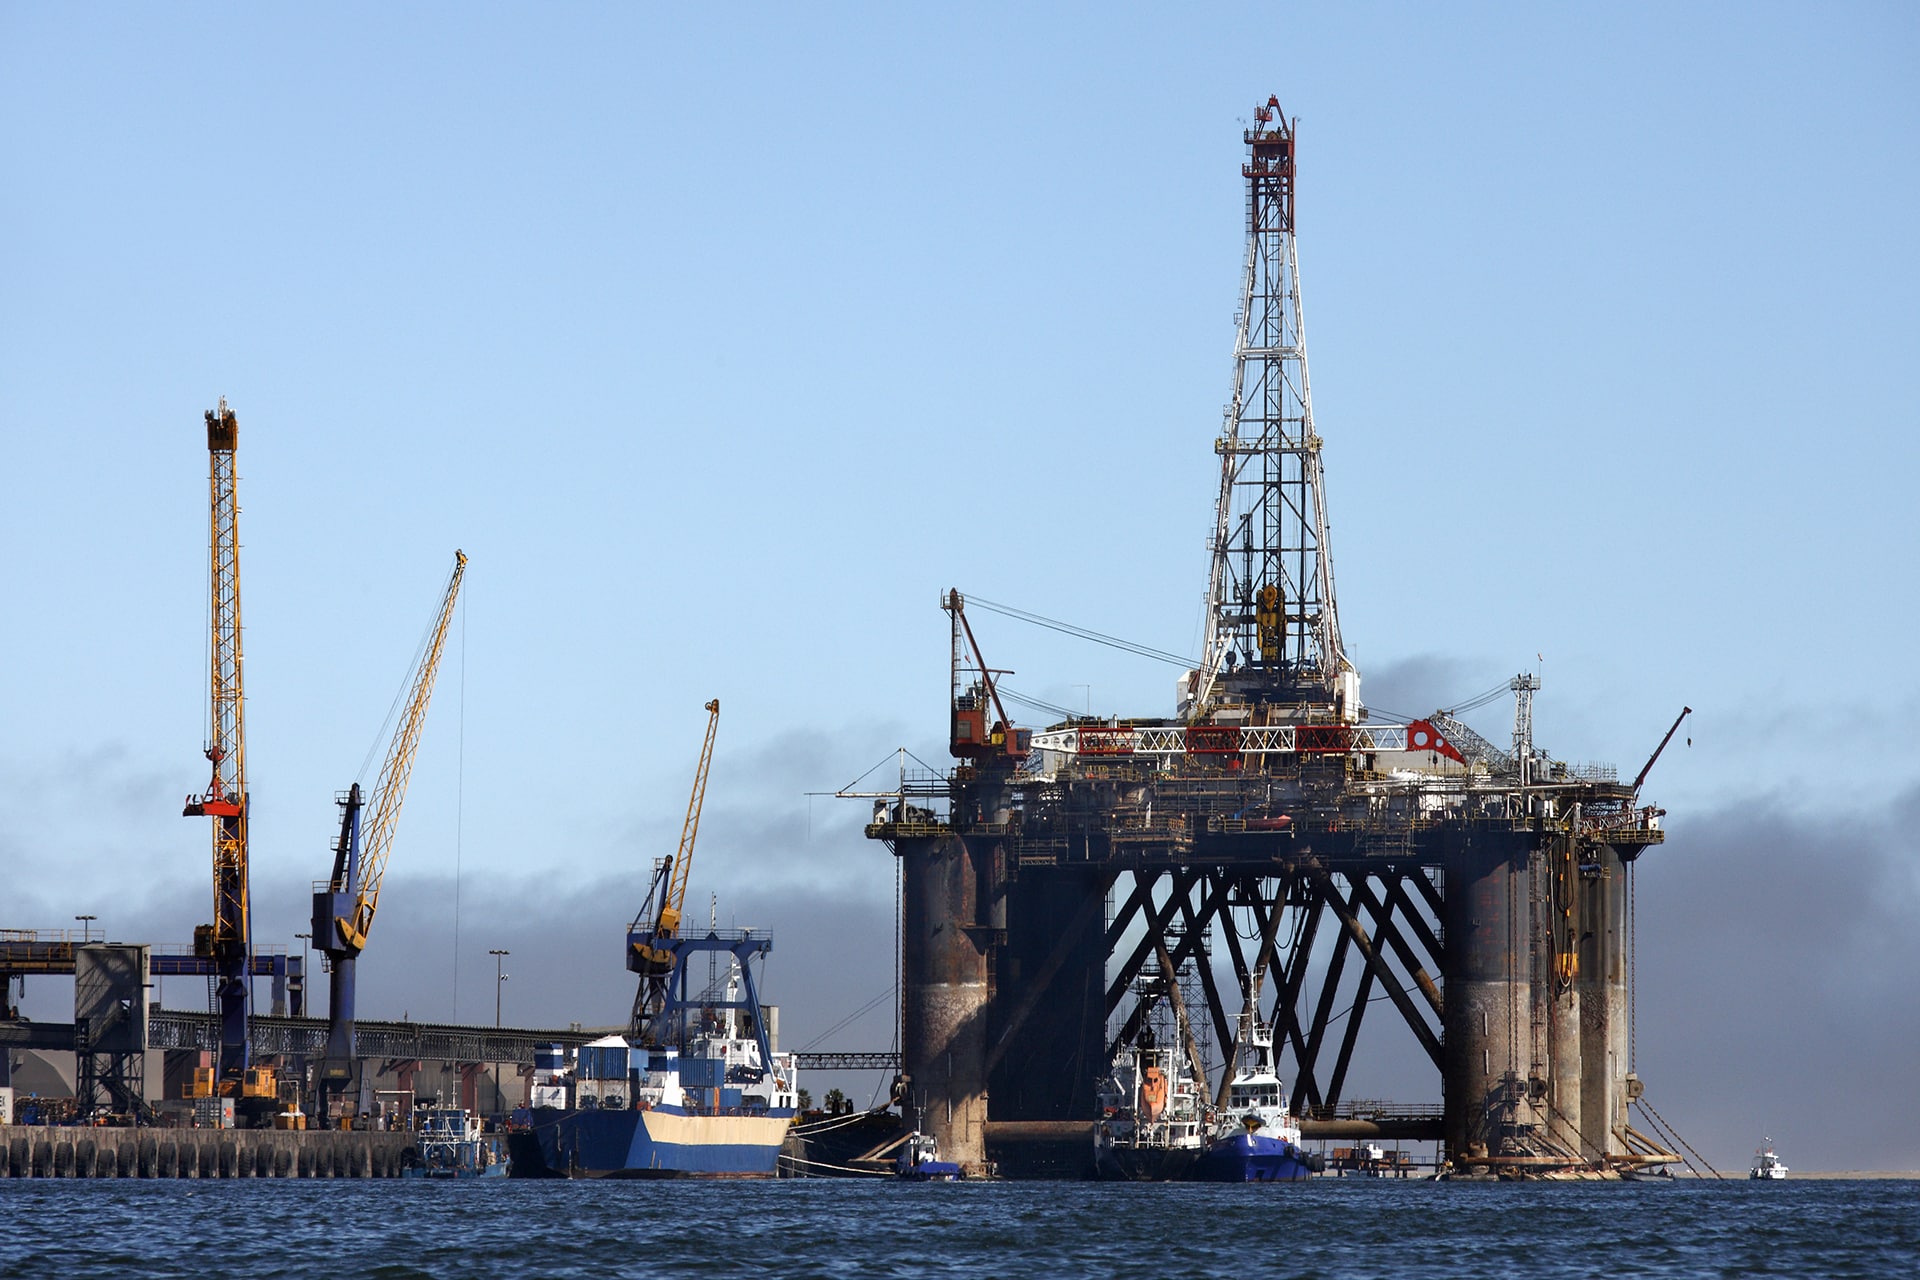 Oil Drilling Platform under construction at Walvis Bay in Namibia